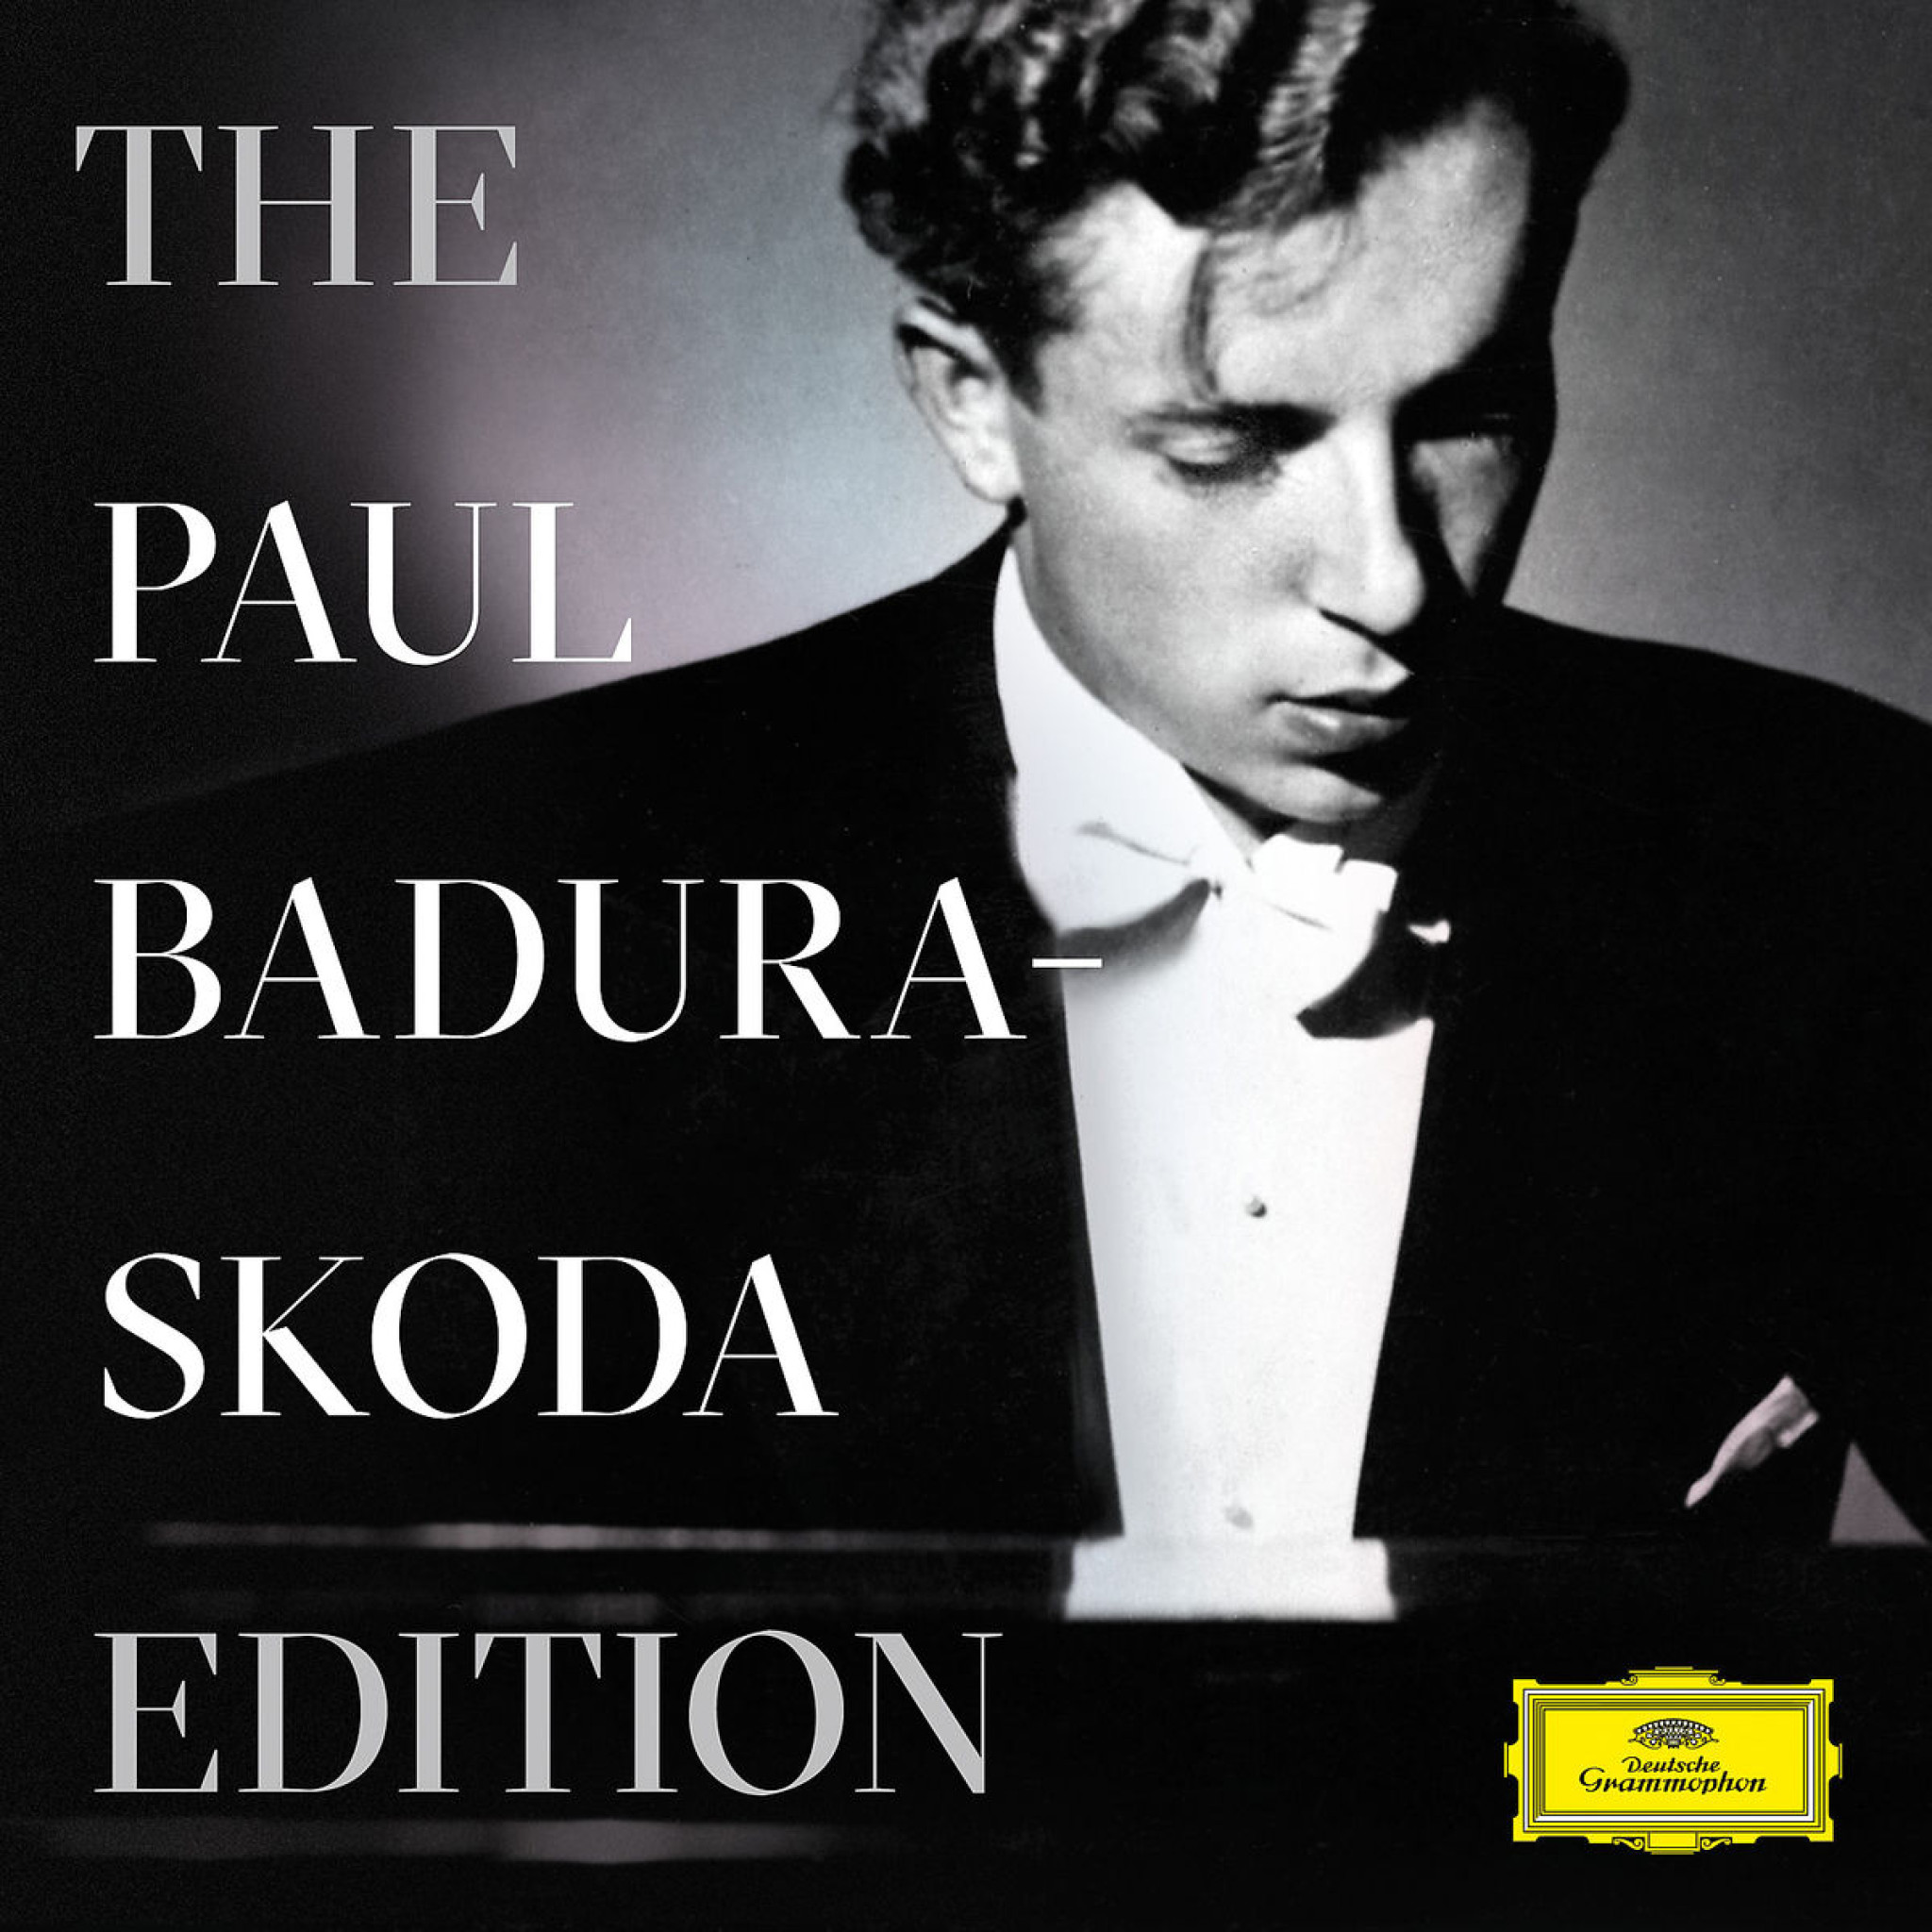 THE PAUL BADURA-SKODA EDITION